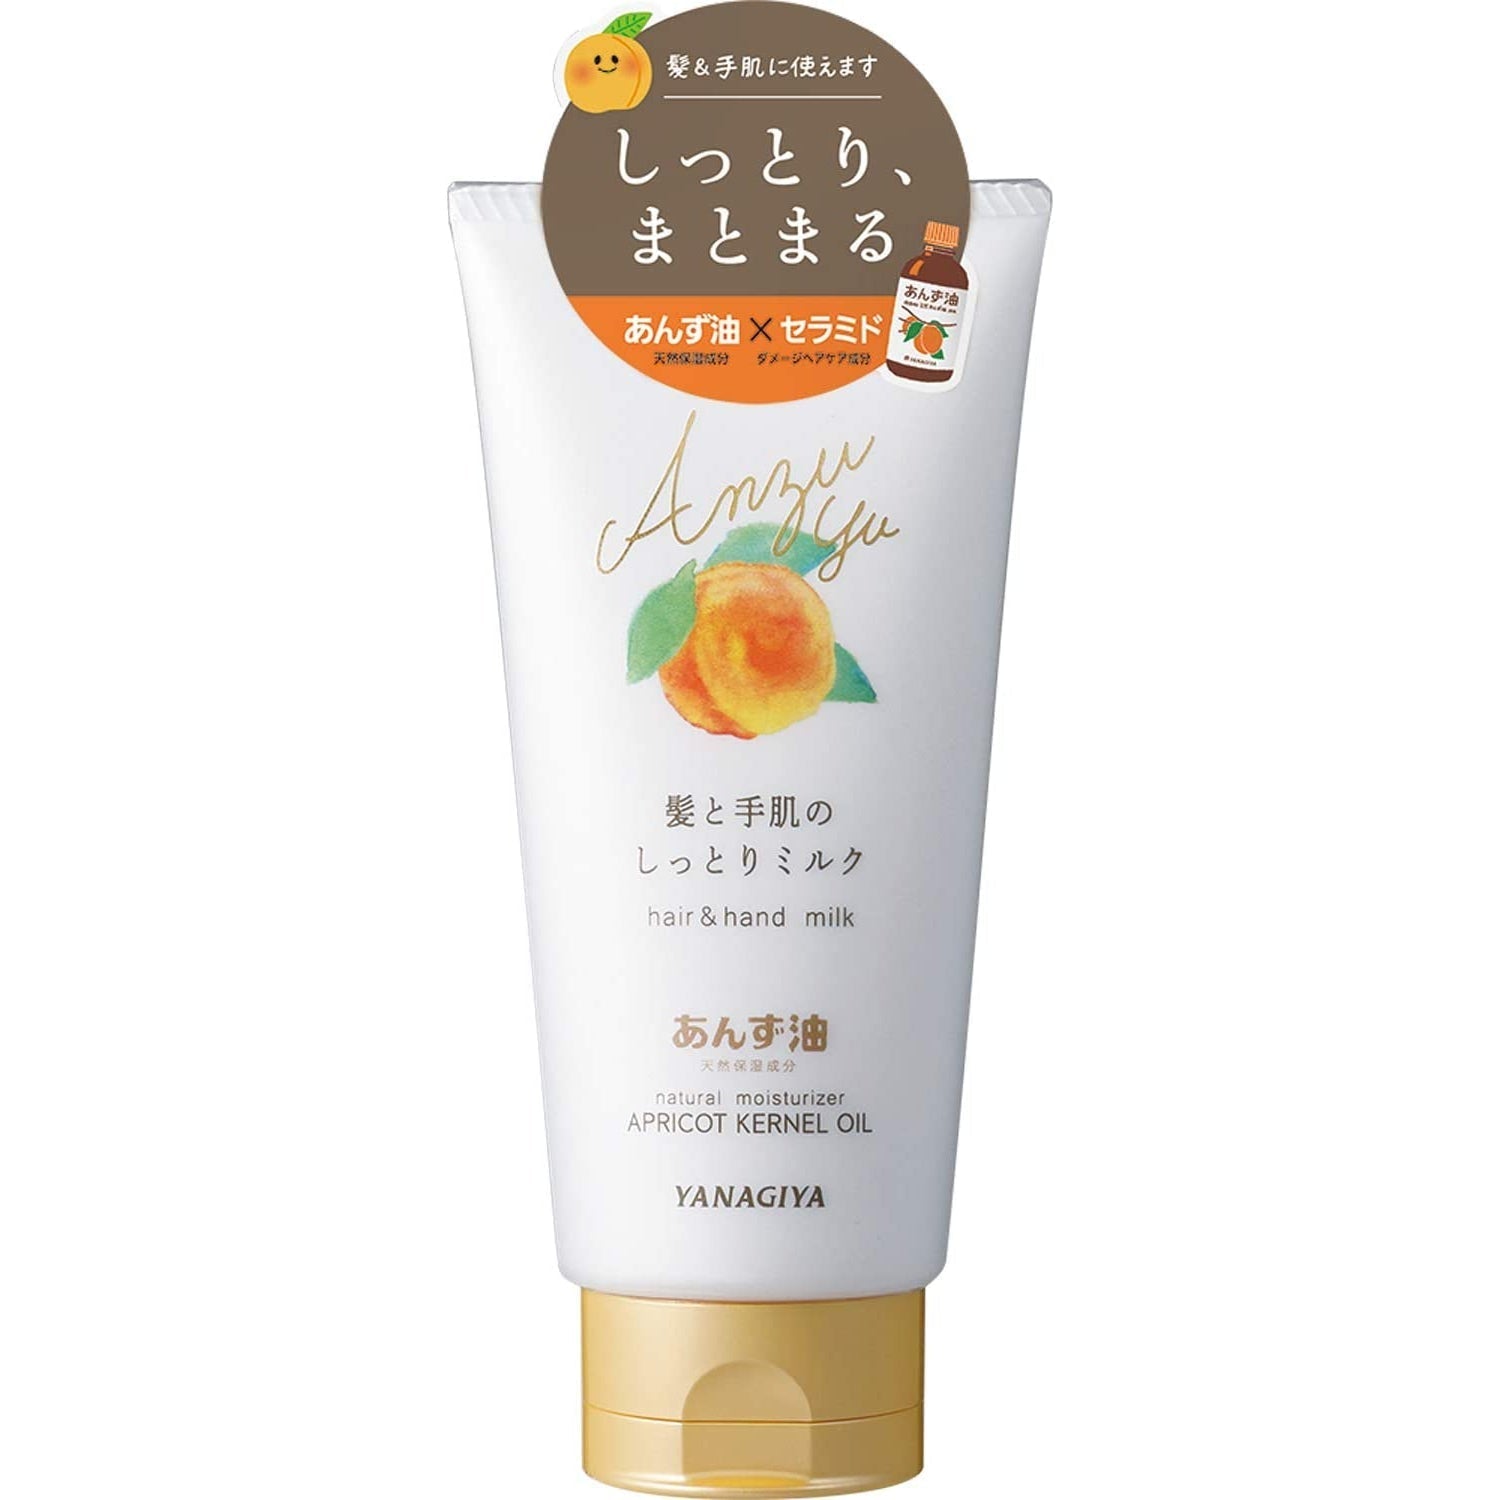 Yanagiya Apricot Oil Moisturizer Hair & Hand Milk Cream 120g